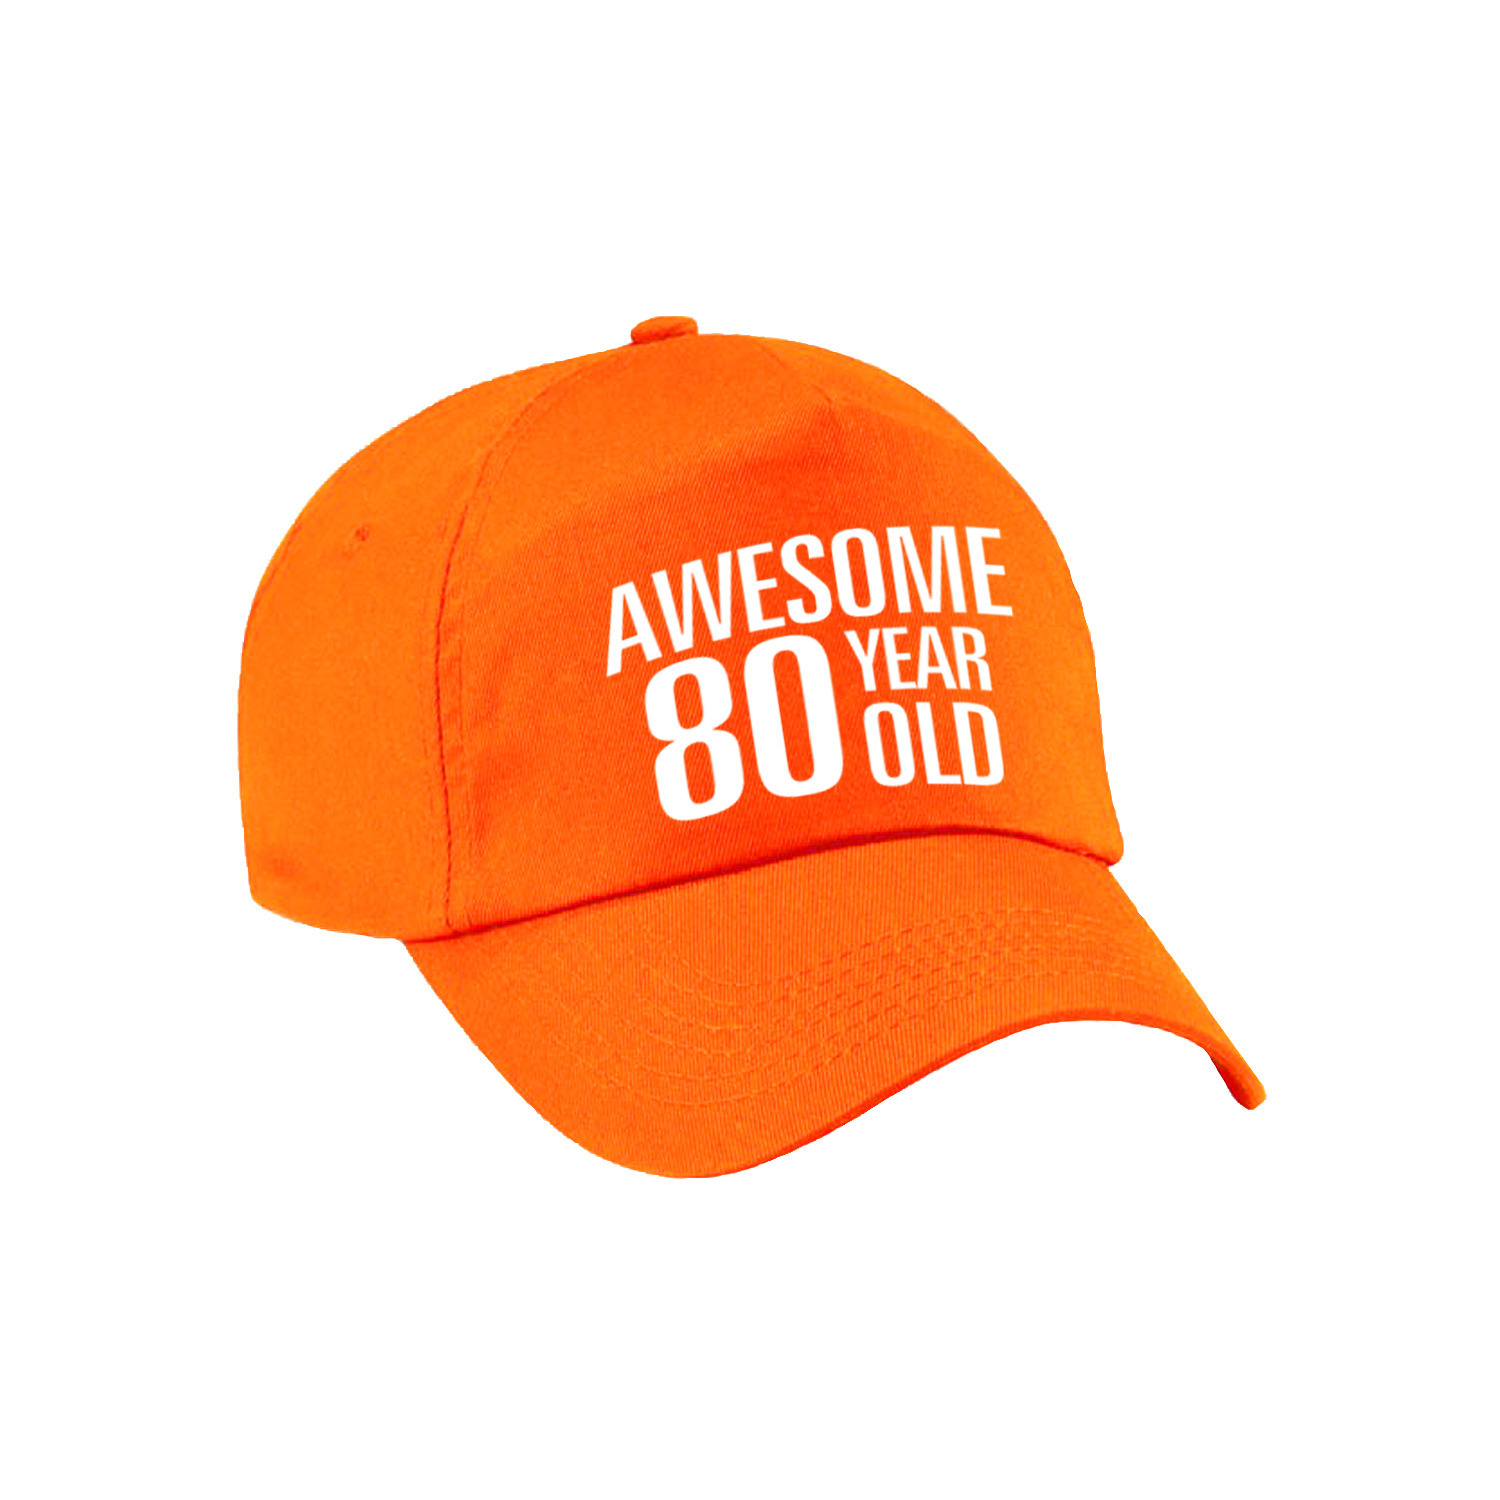 Awesome 80 year old verjaardag pet / cap oranje voor dames en heren